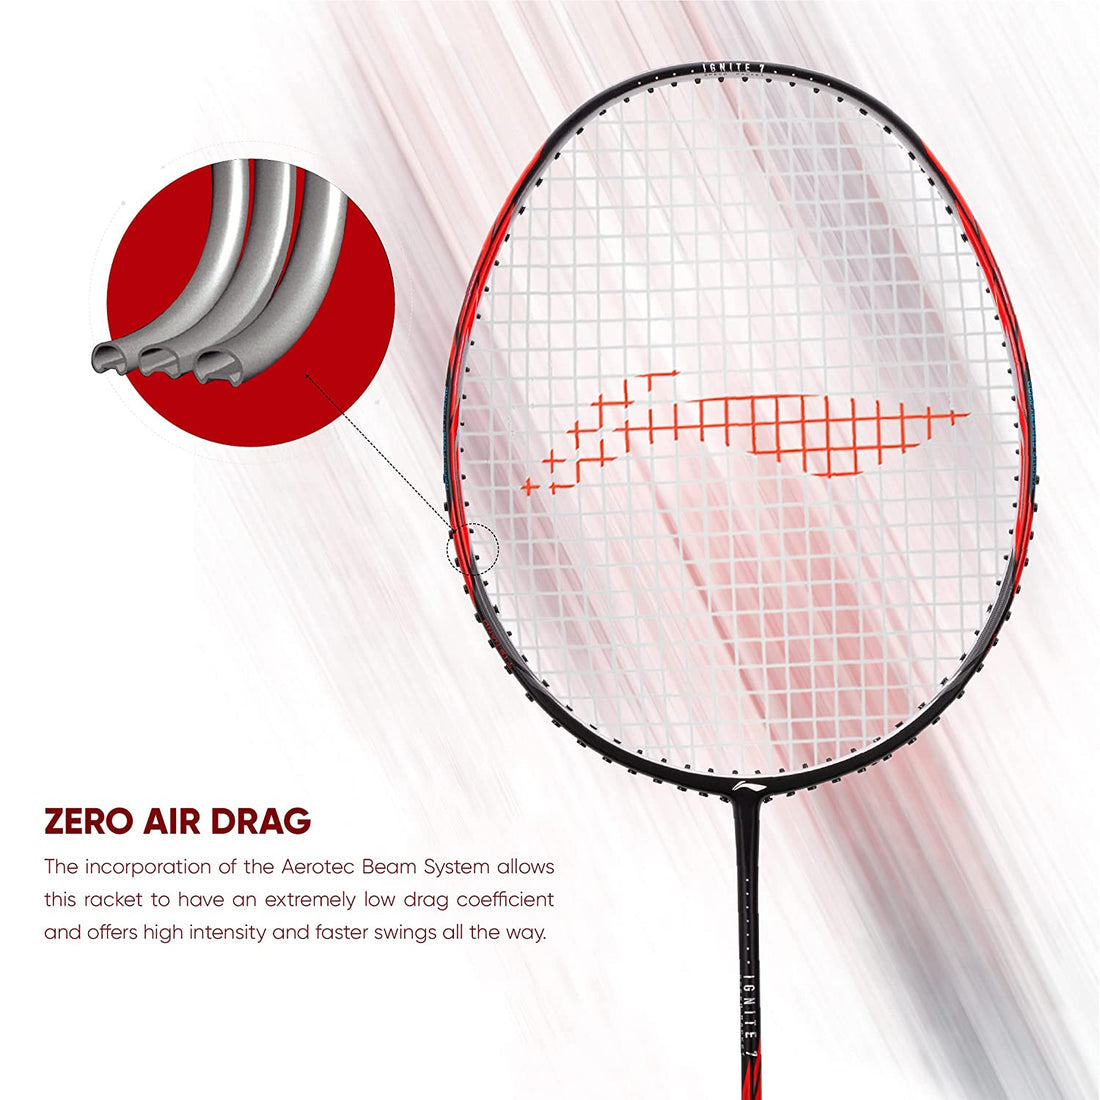 Li-Ning Ignite 7 Badminton Strung Racquet - Best Price online Prokicksports.com